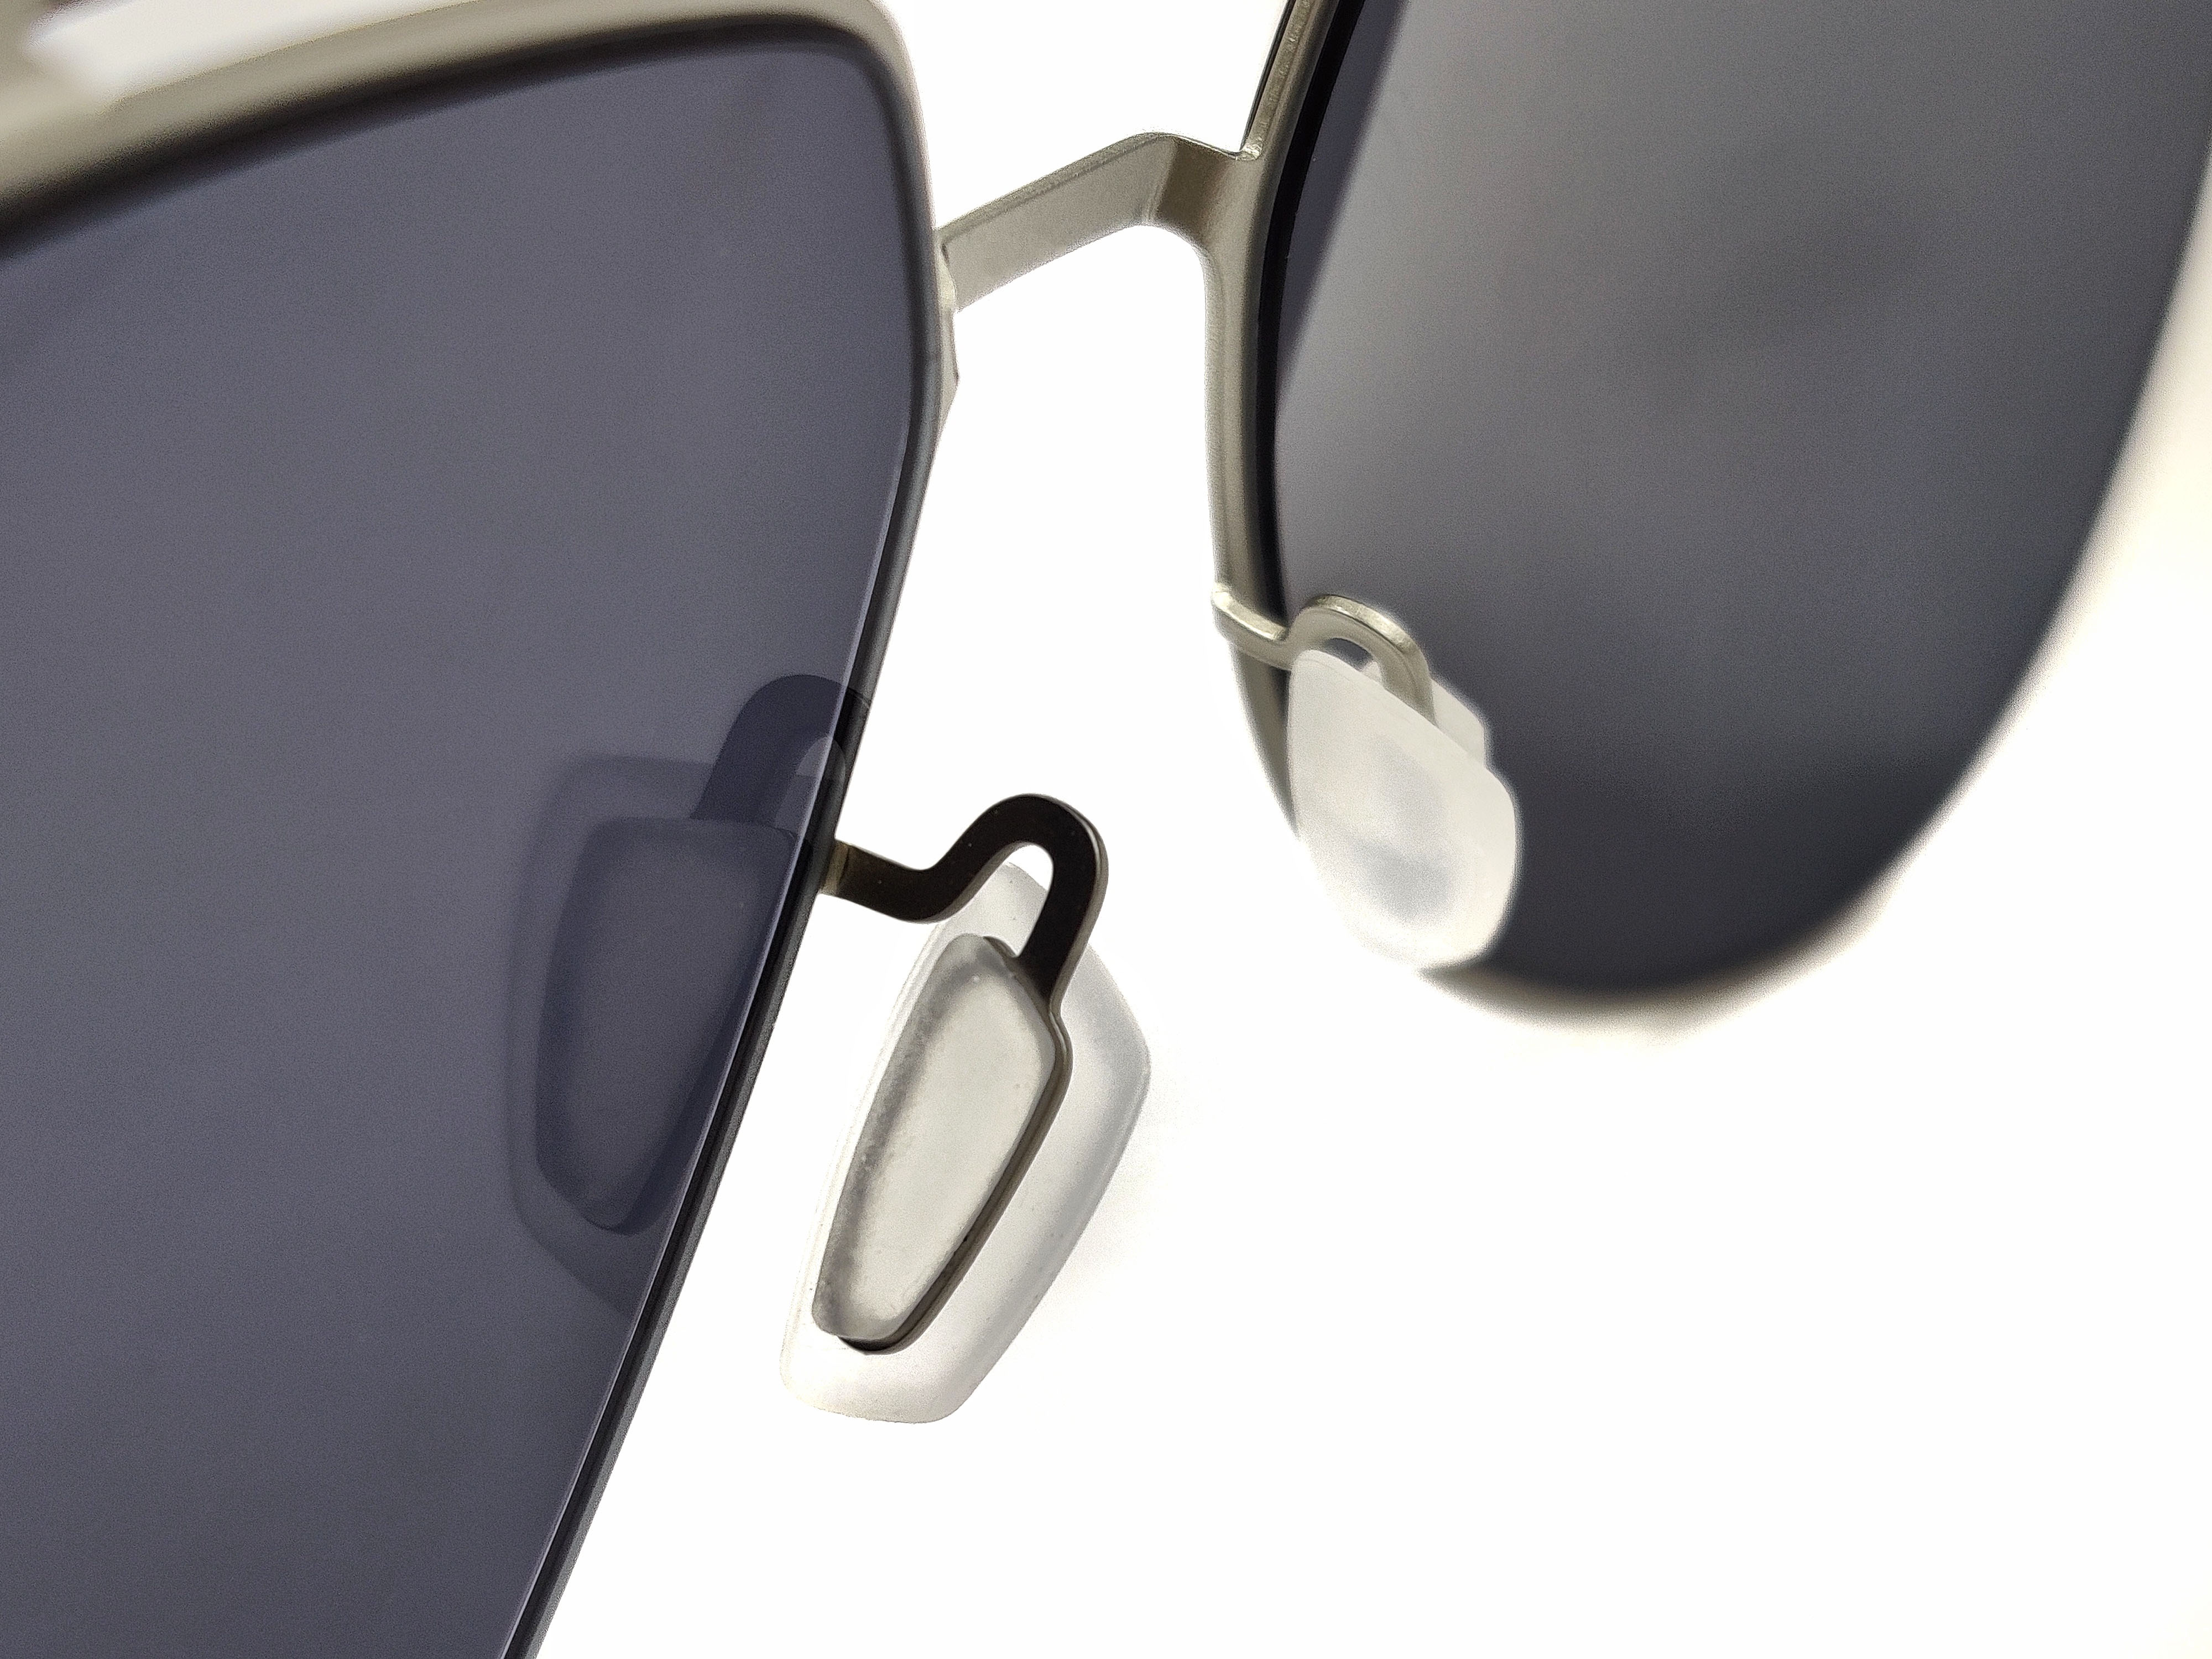 Gafas de sol polarizadas ovaladas Fabricantes de gafas de sol personalizadas Gafas de sol impresas personalizadas